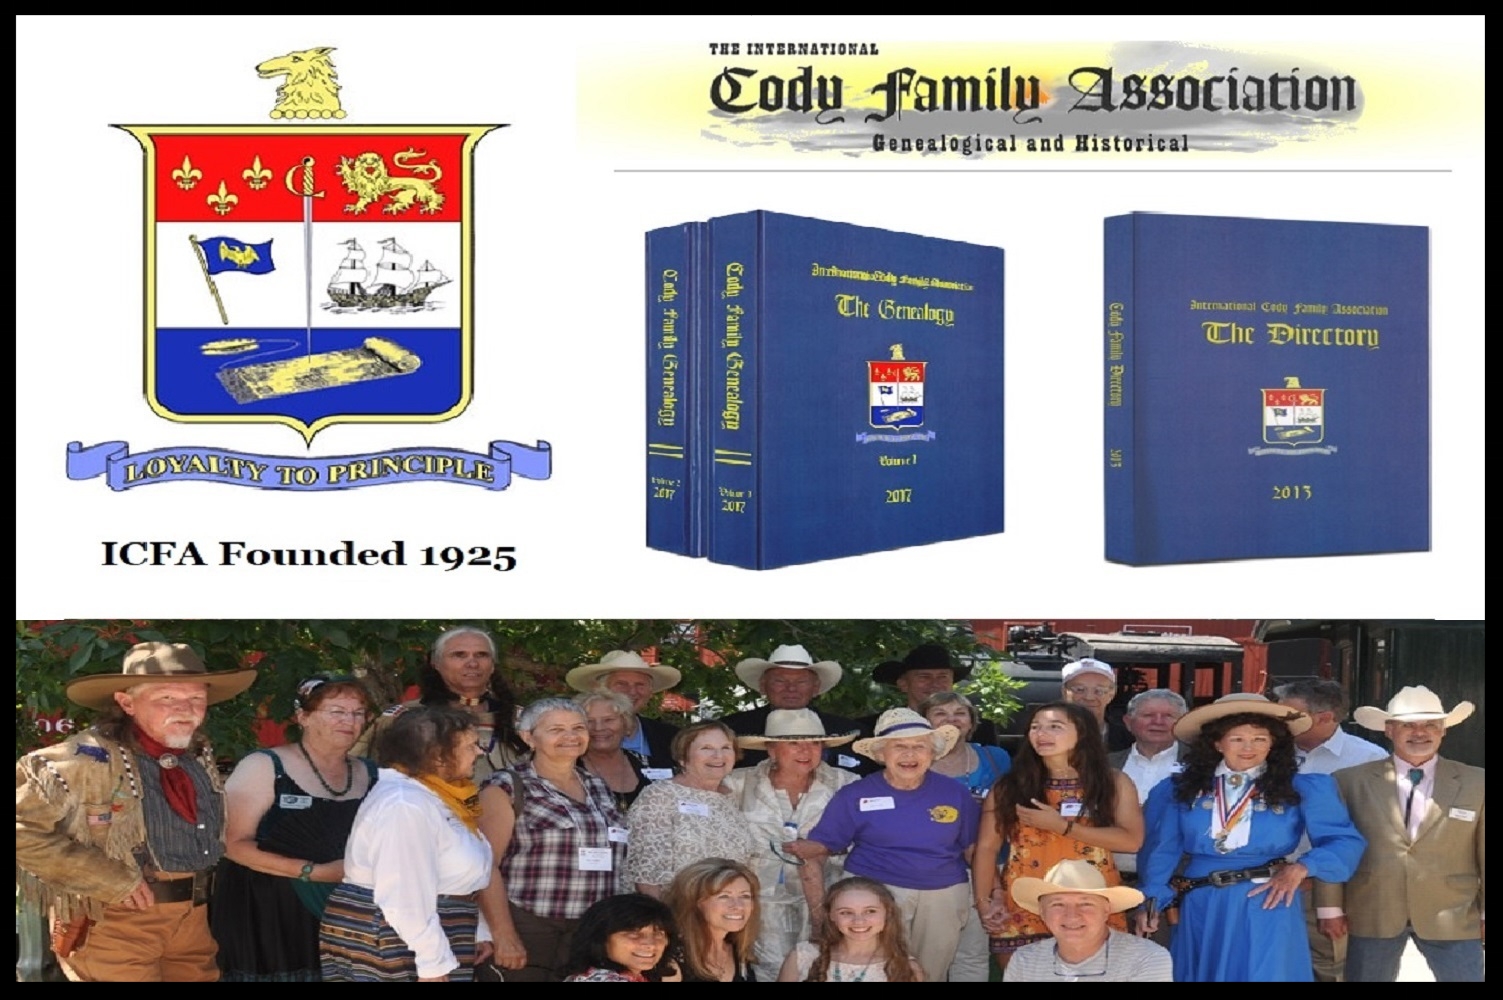 ICFA - International Cody Family Association